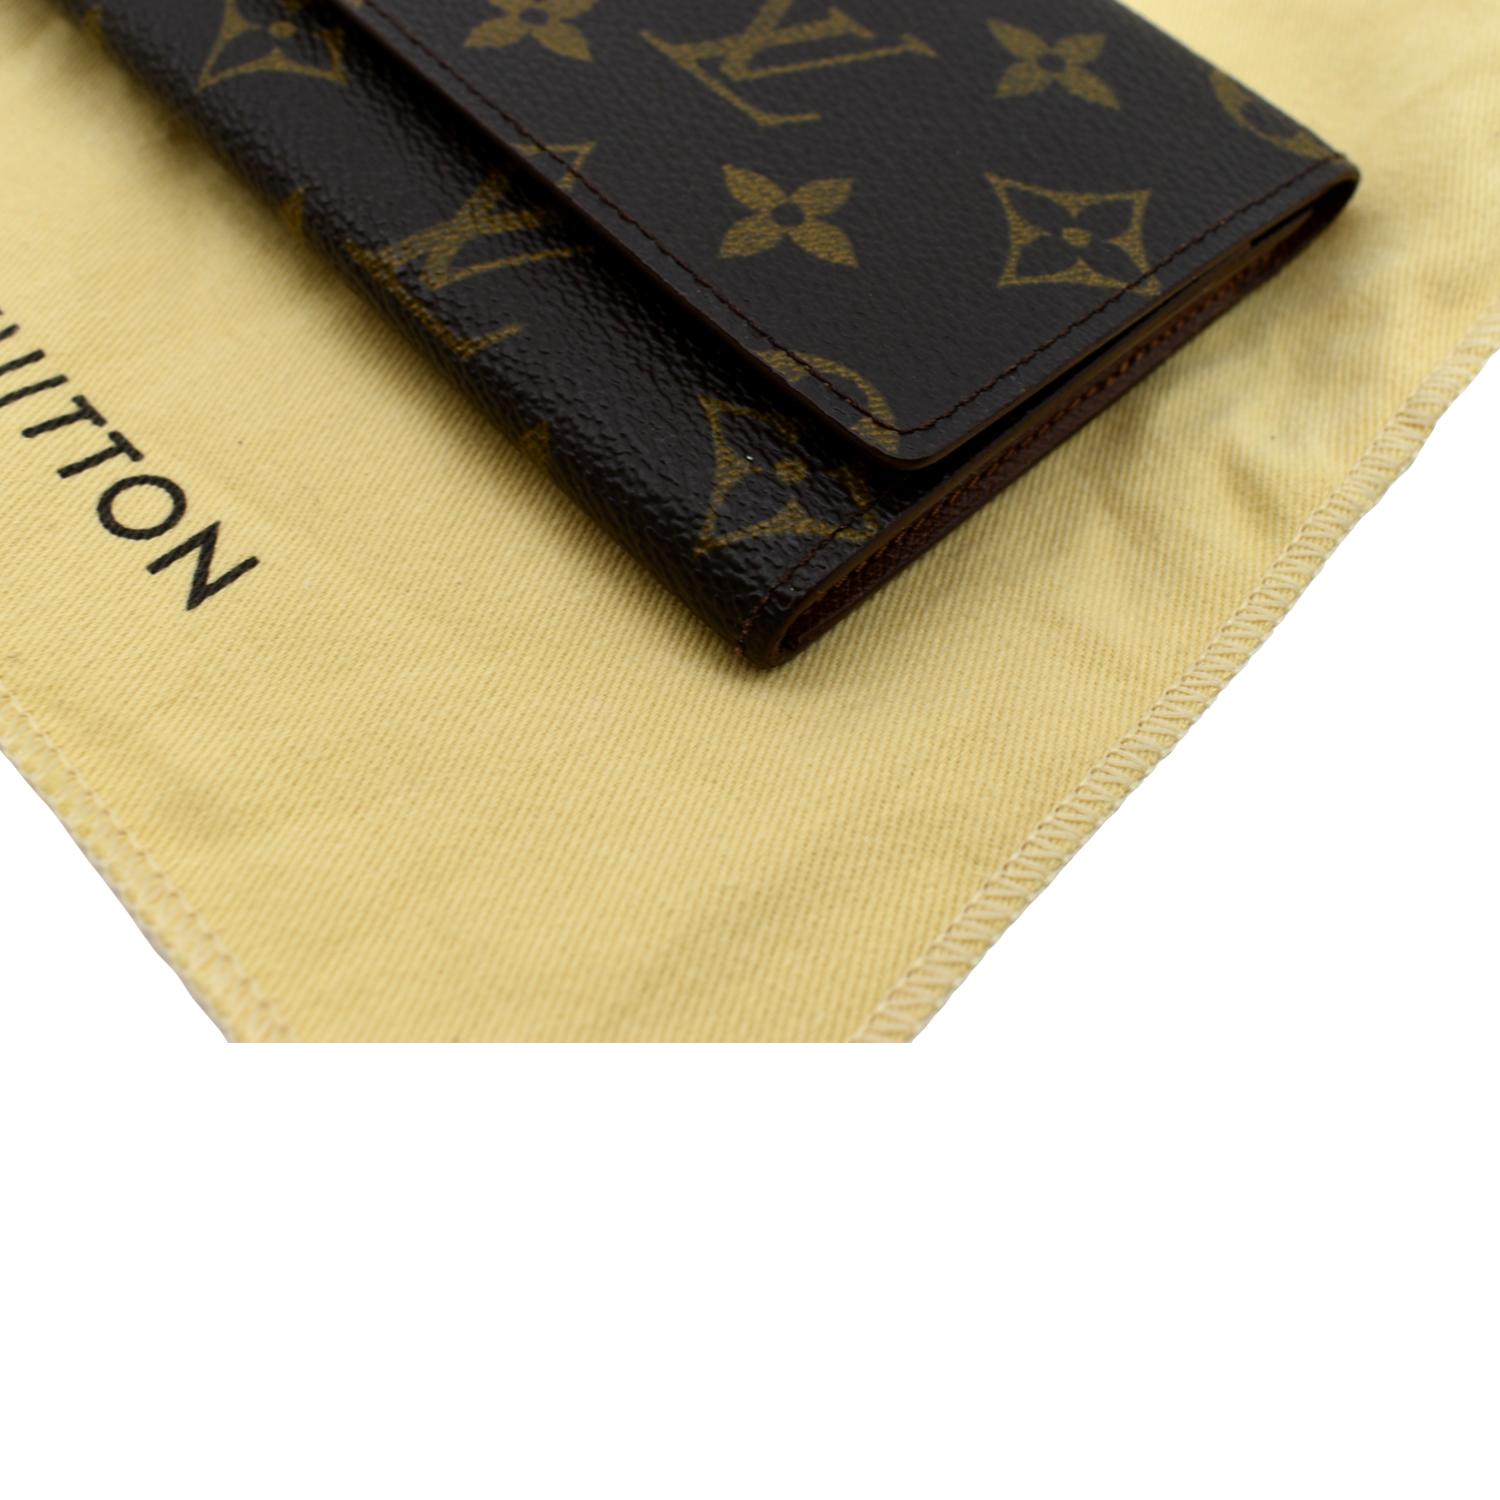 Authentic Vintage Louis Vuitton Card holder wallet 2 fold